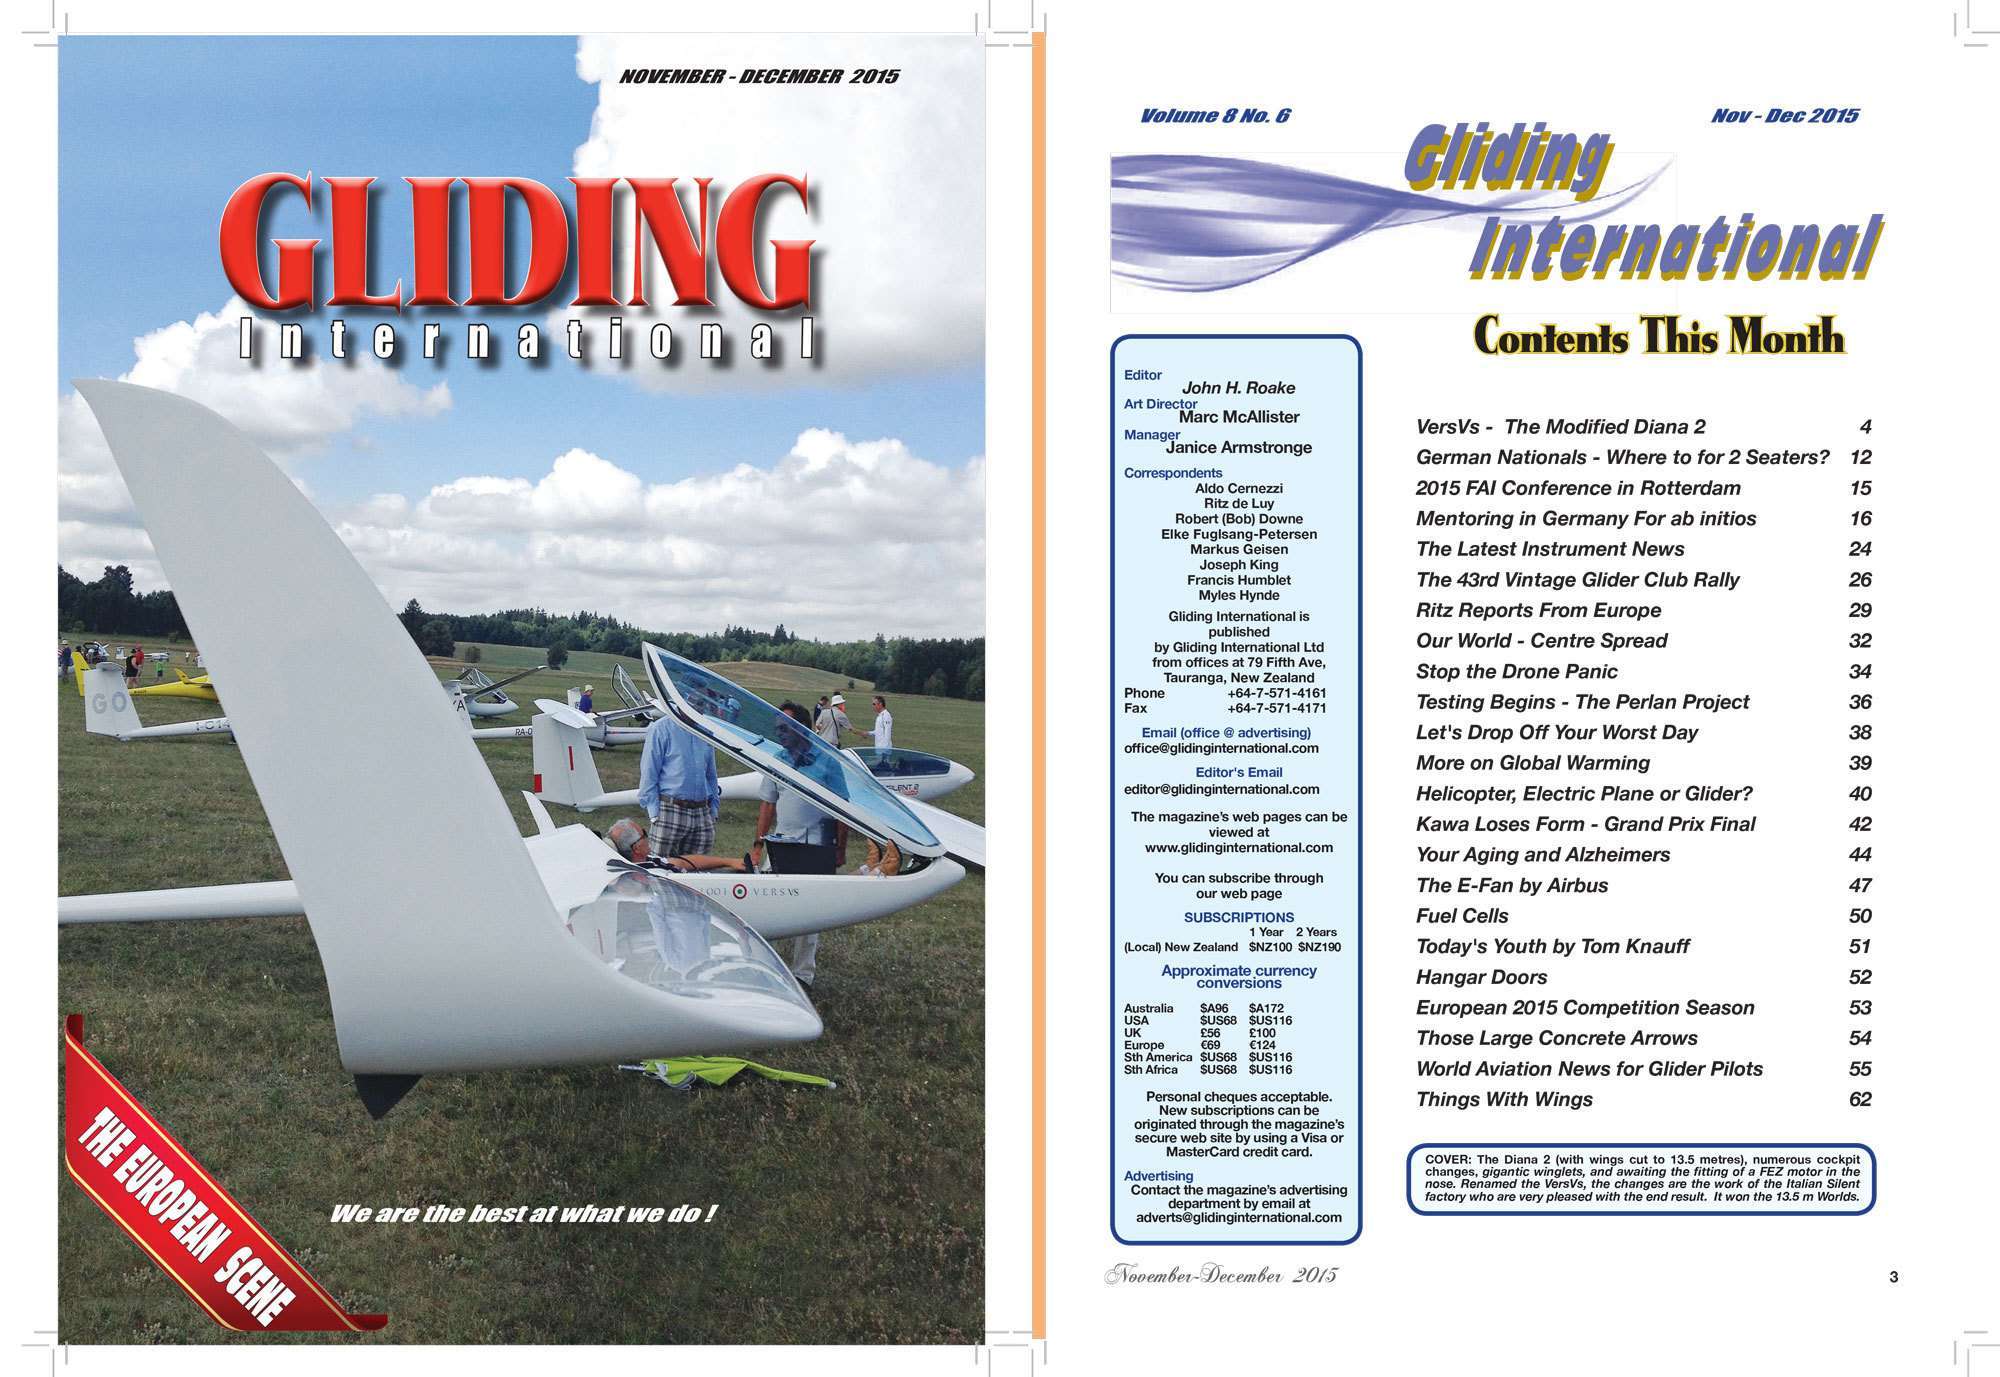 Gliding International image